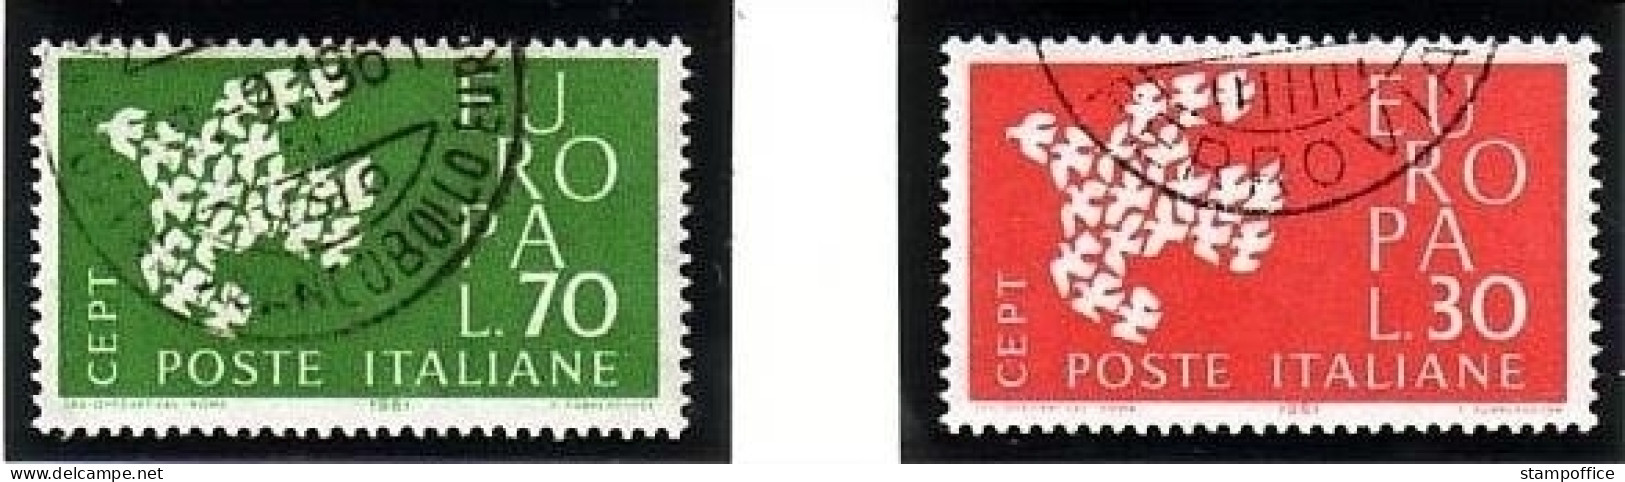 ITALIEN MI-NR. 1113-1114 O EUROPA 1961 - TAUBE - 1961